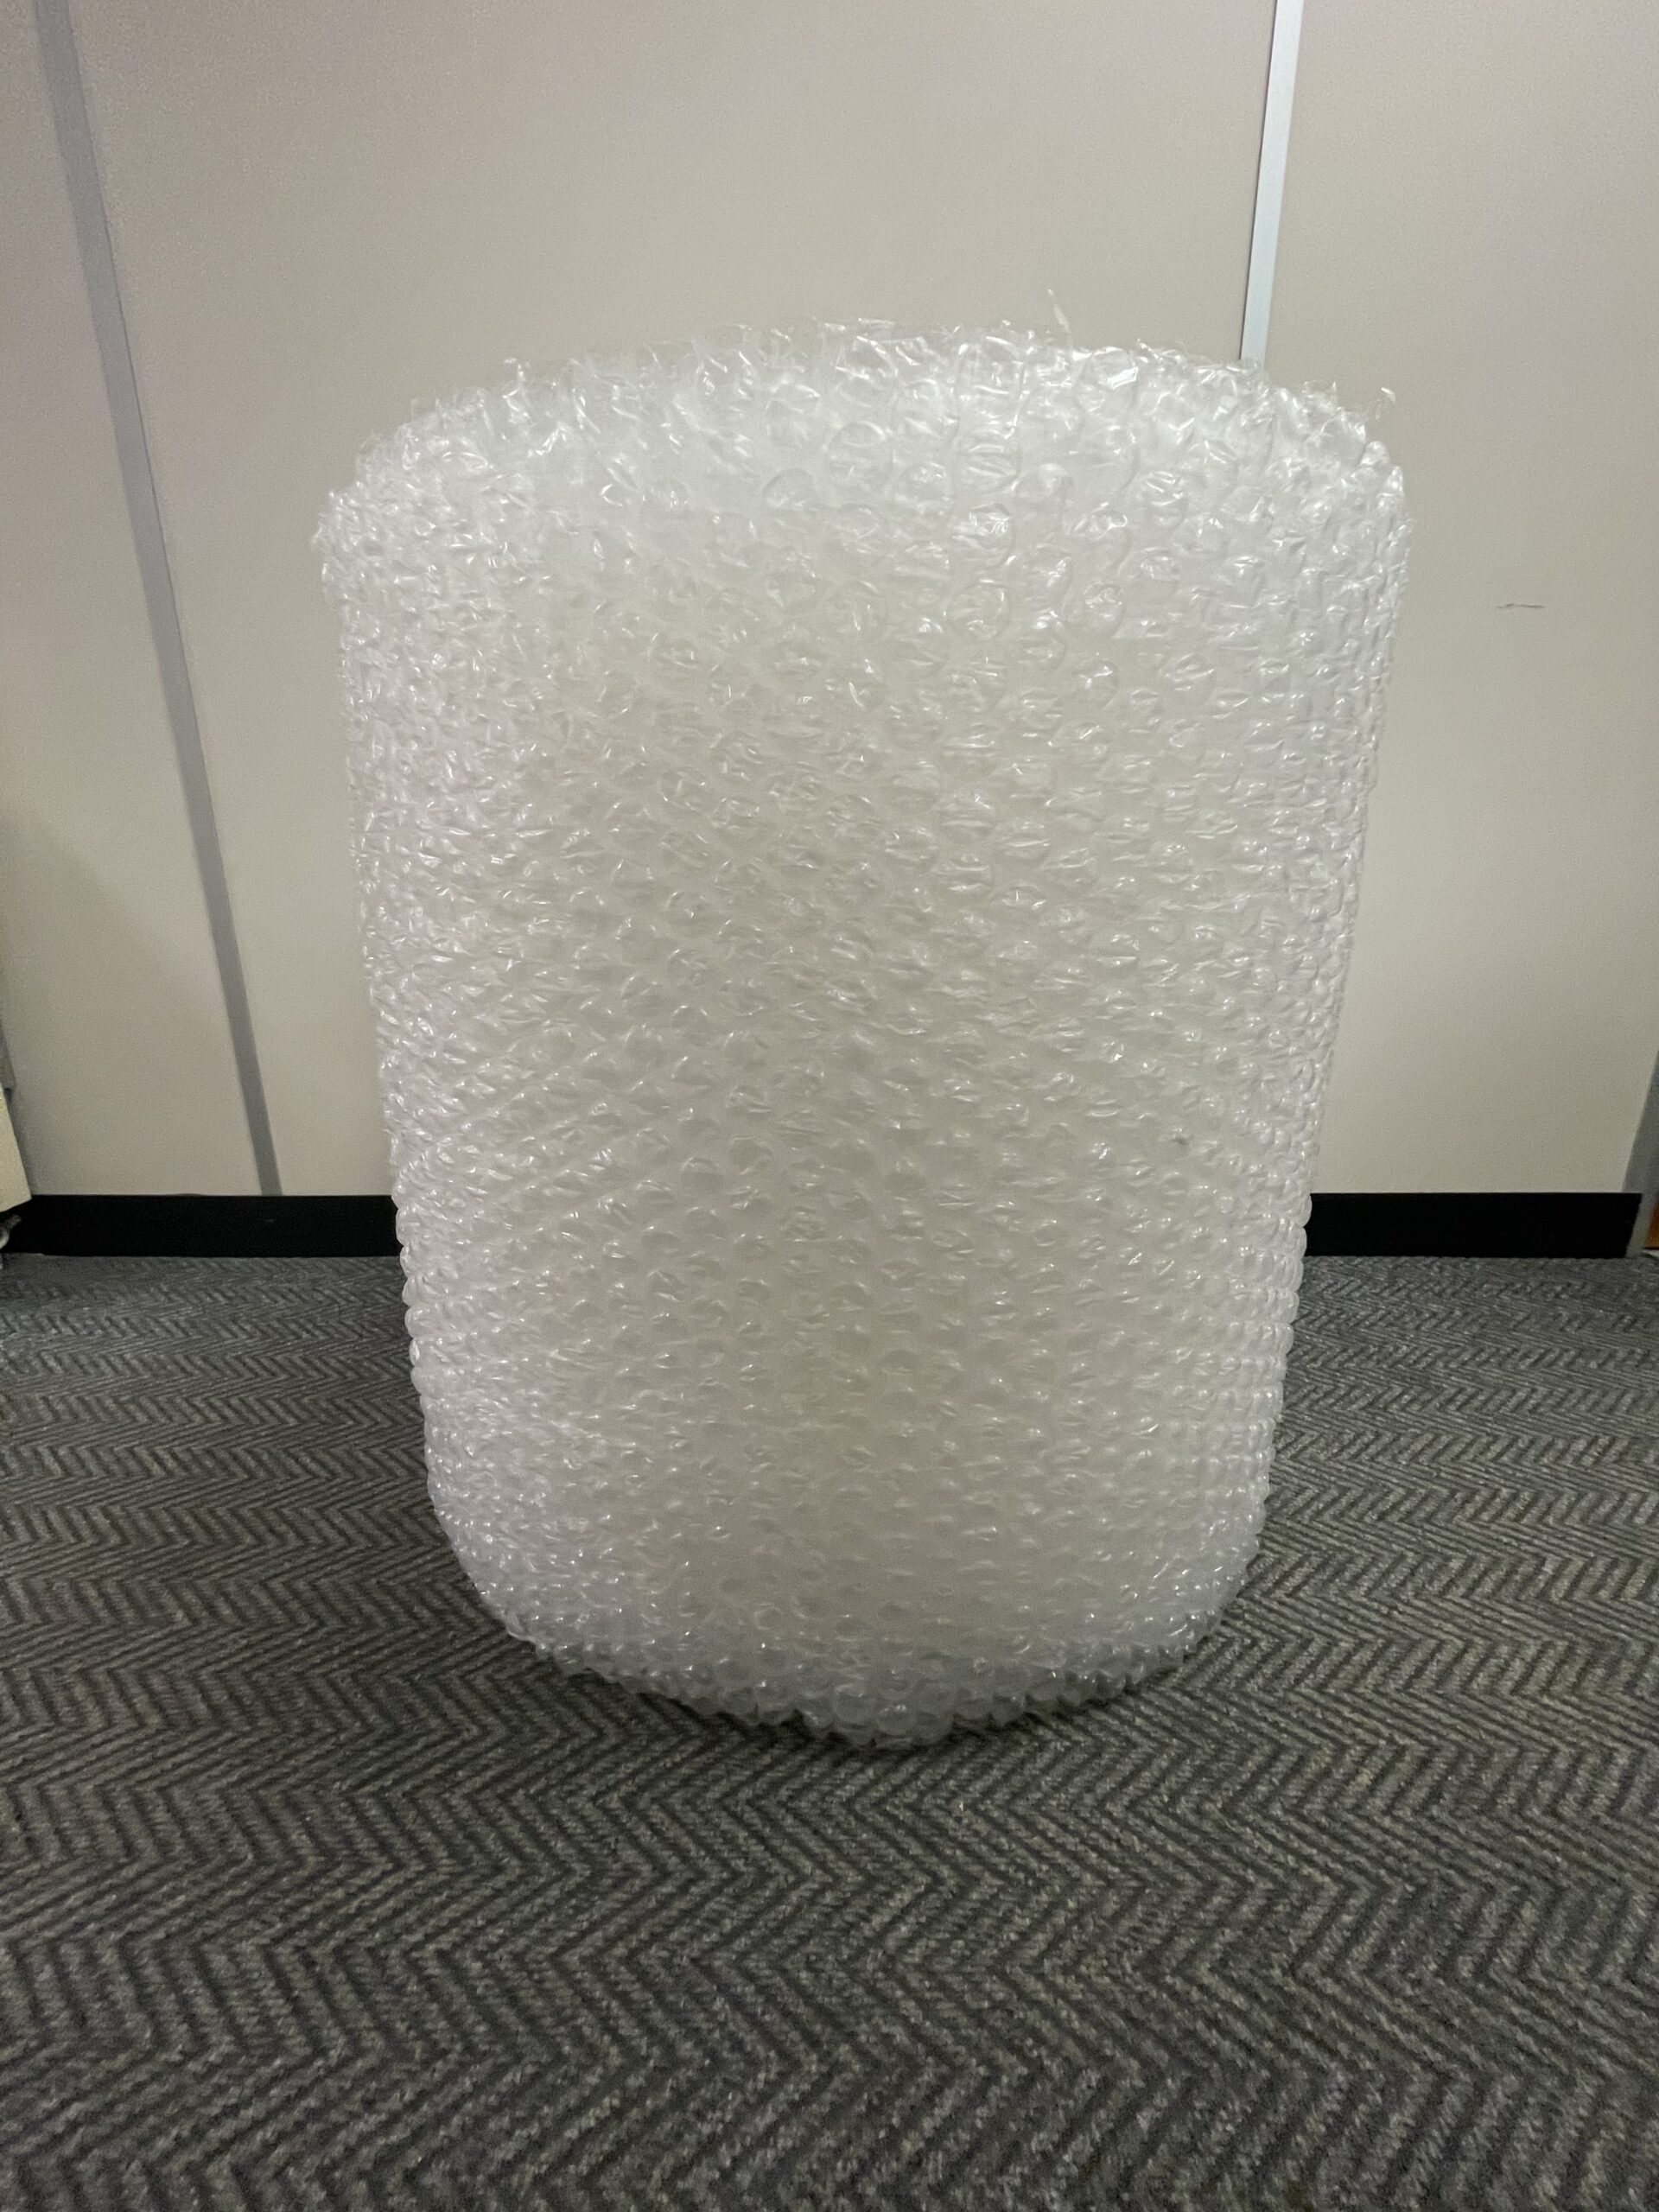 Bubble Wrap, Small & Large Bubblewrap Rolls